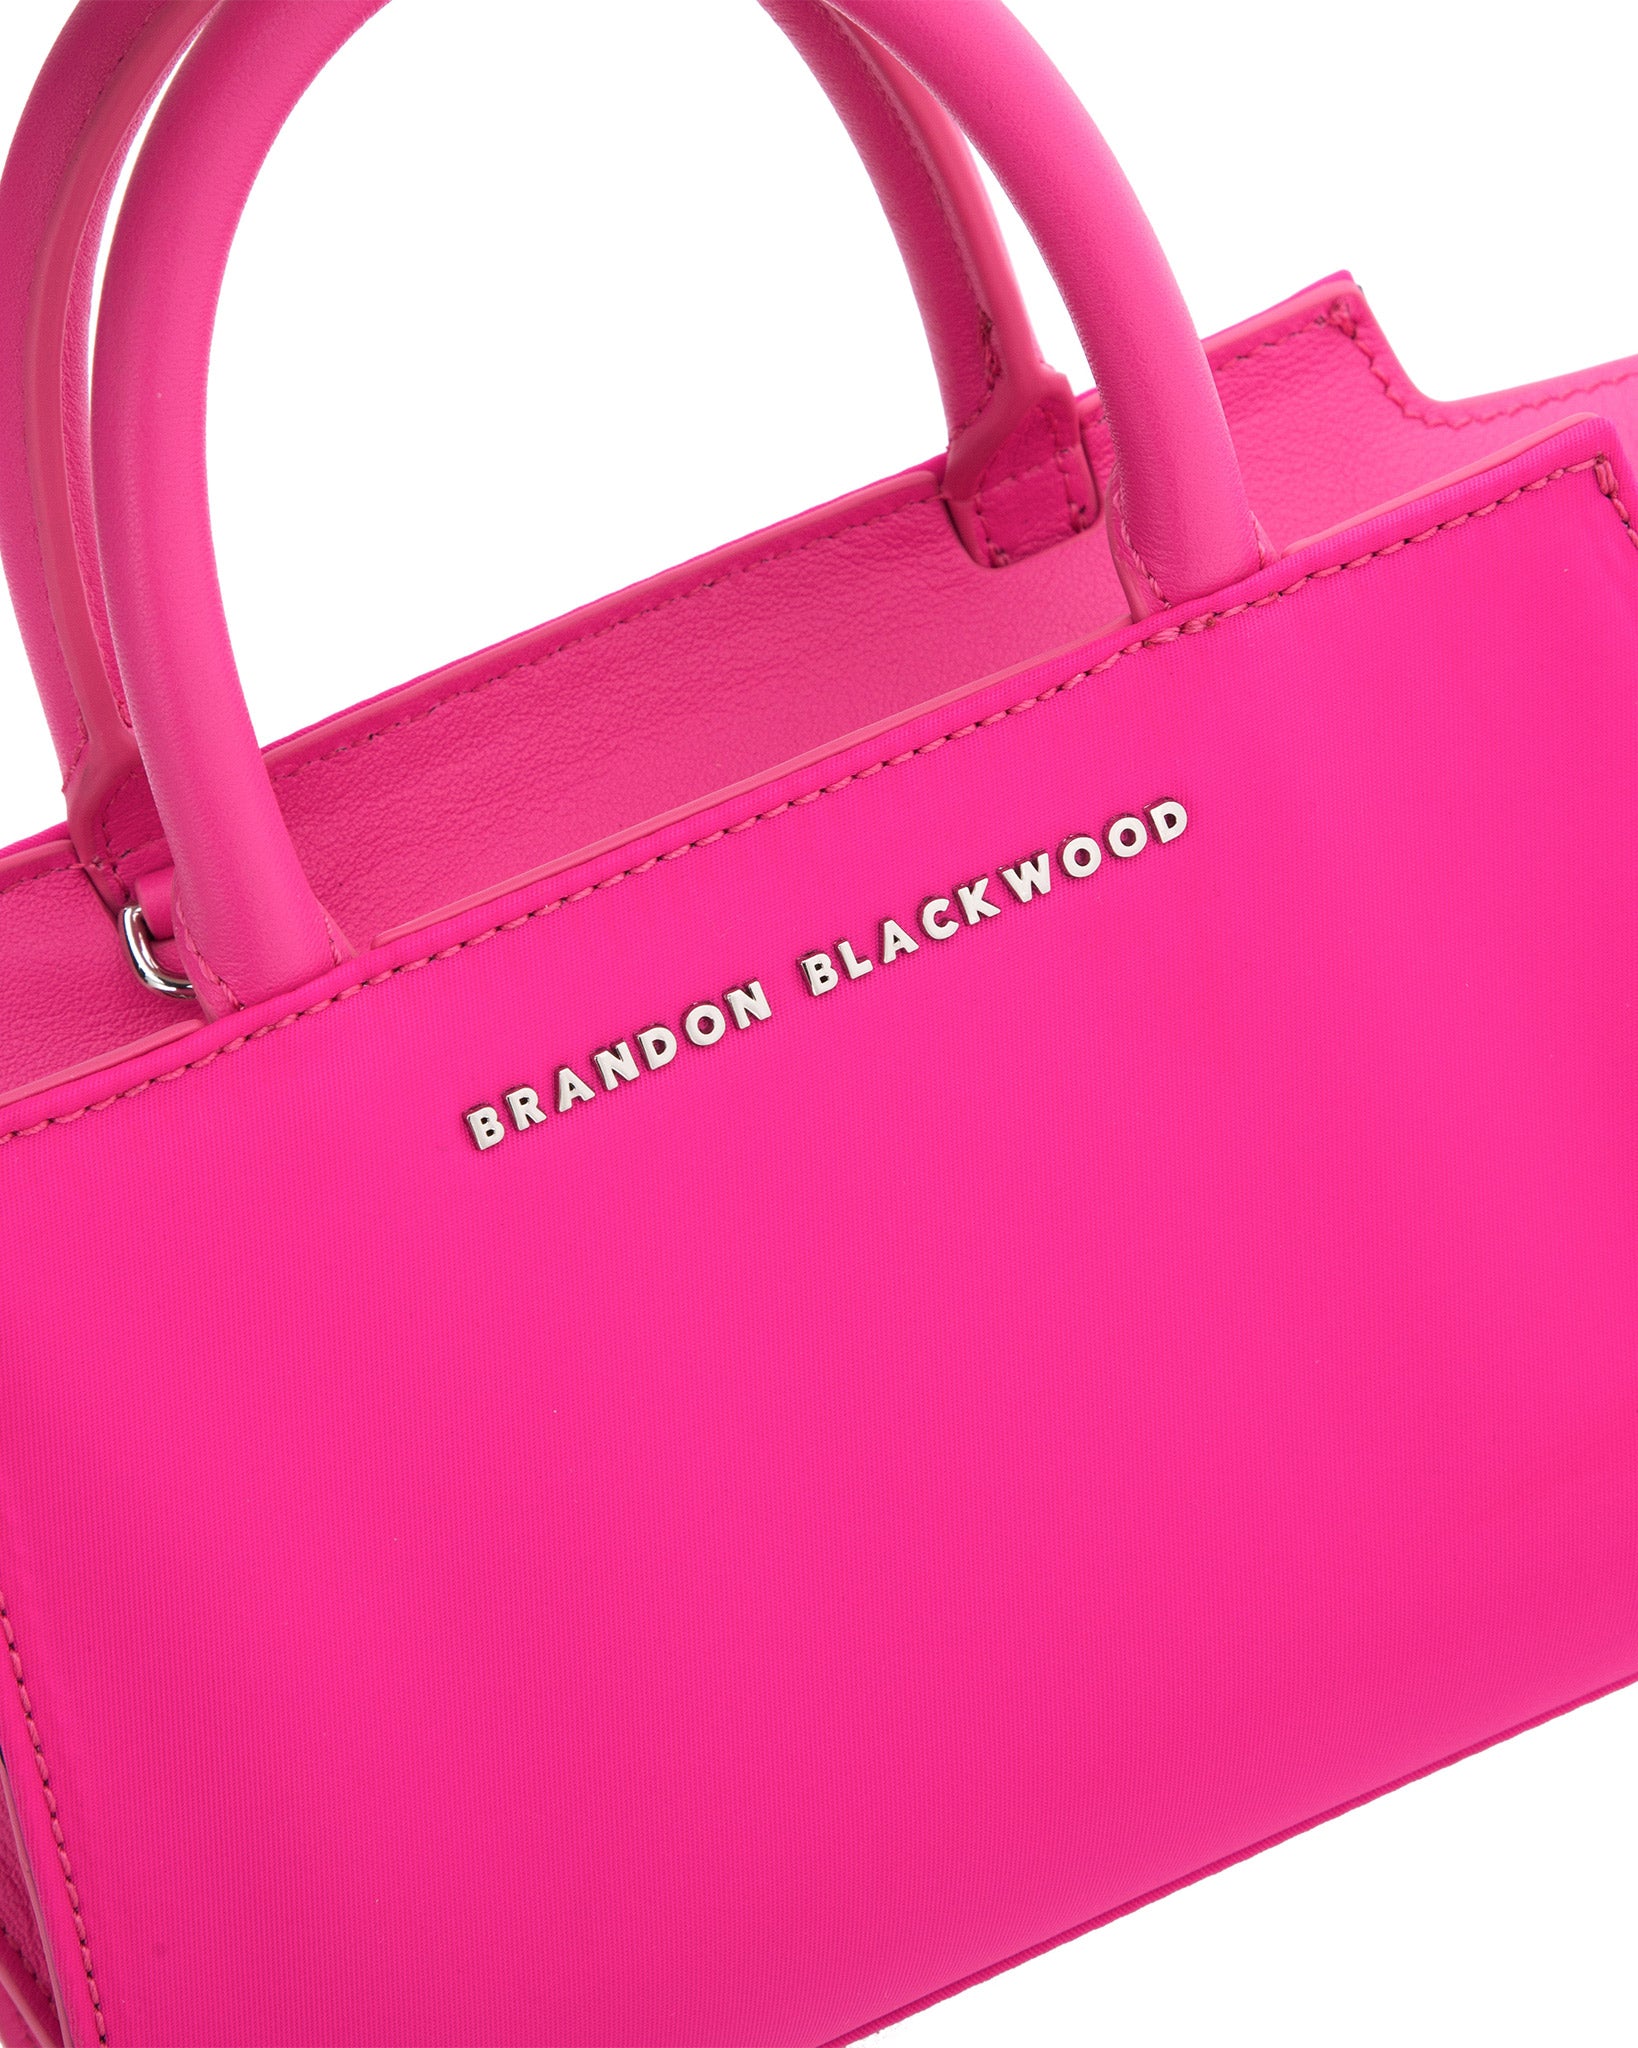 Brandon Blackwood New York - Arlen Bag - Hot Pink Nylon